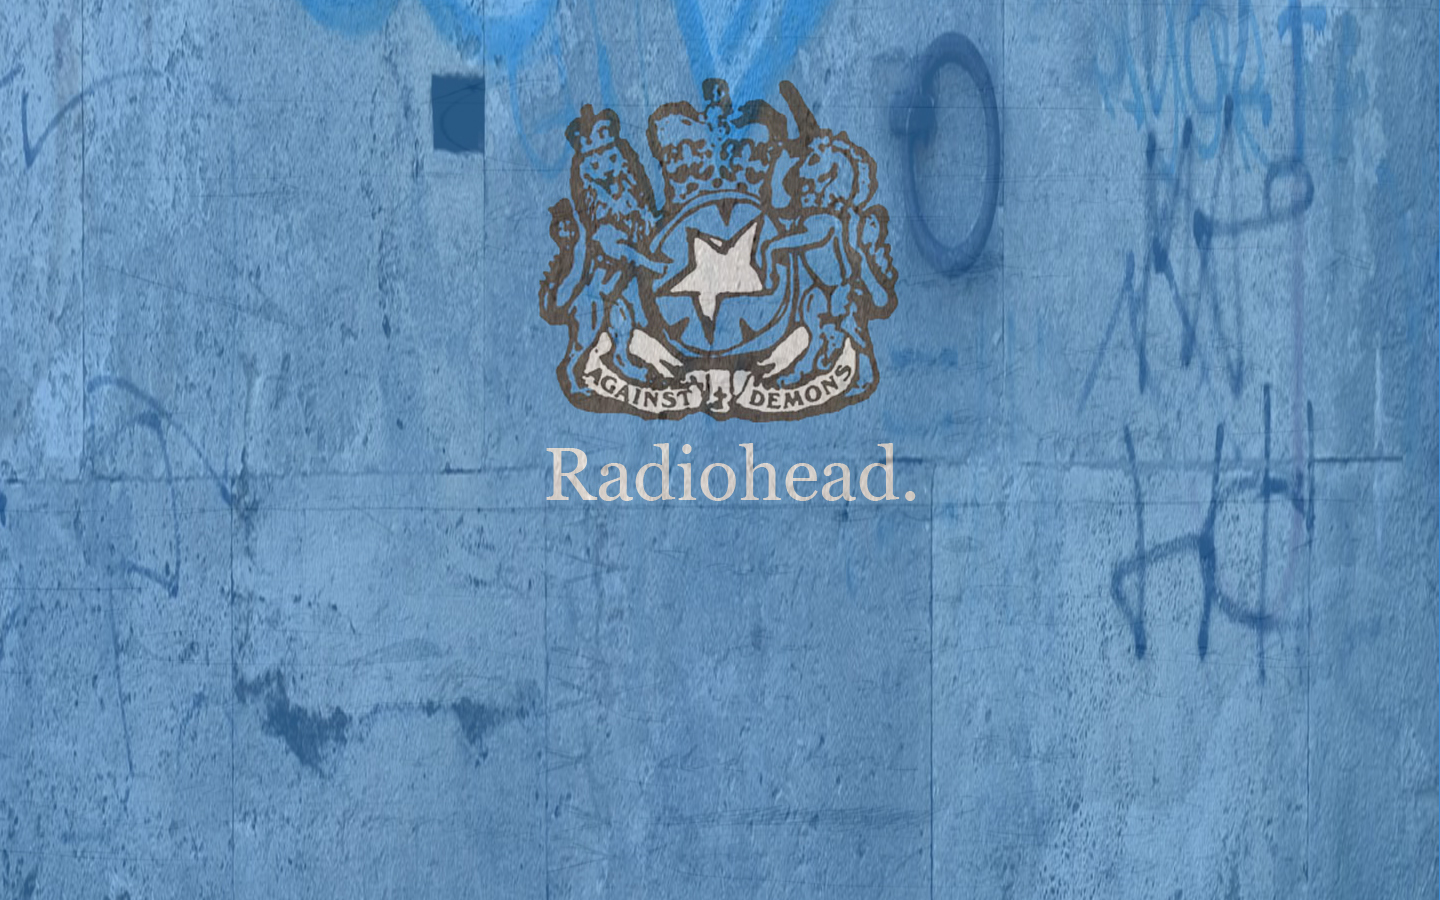 Radiohead - Radiohead Wallpaper (102253) - Fanpop